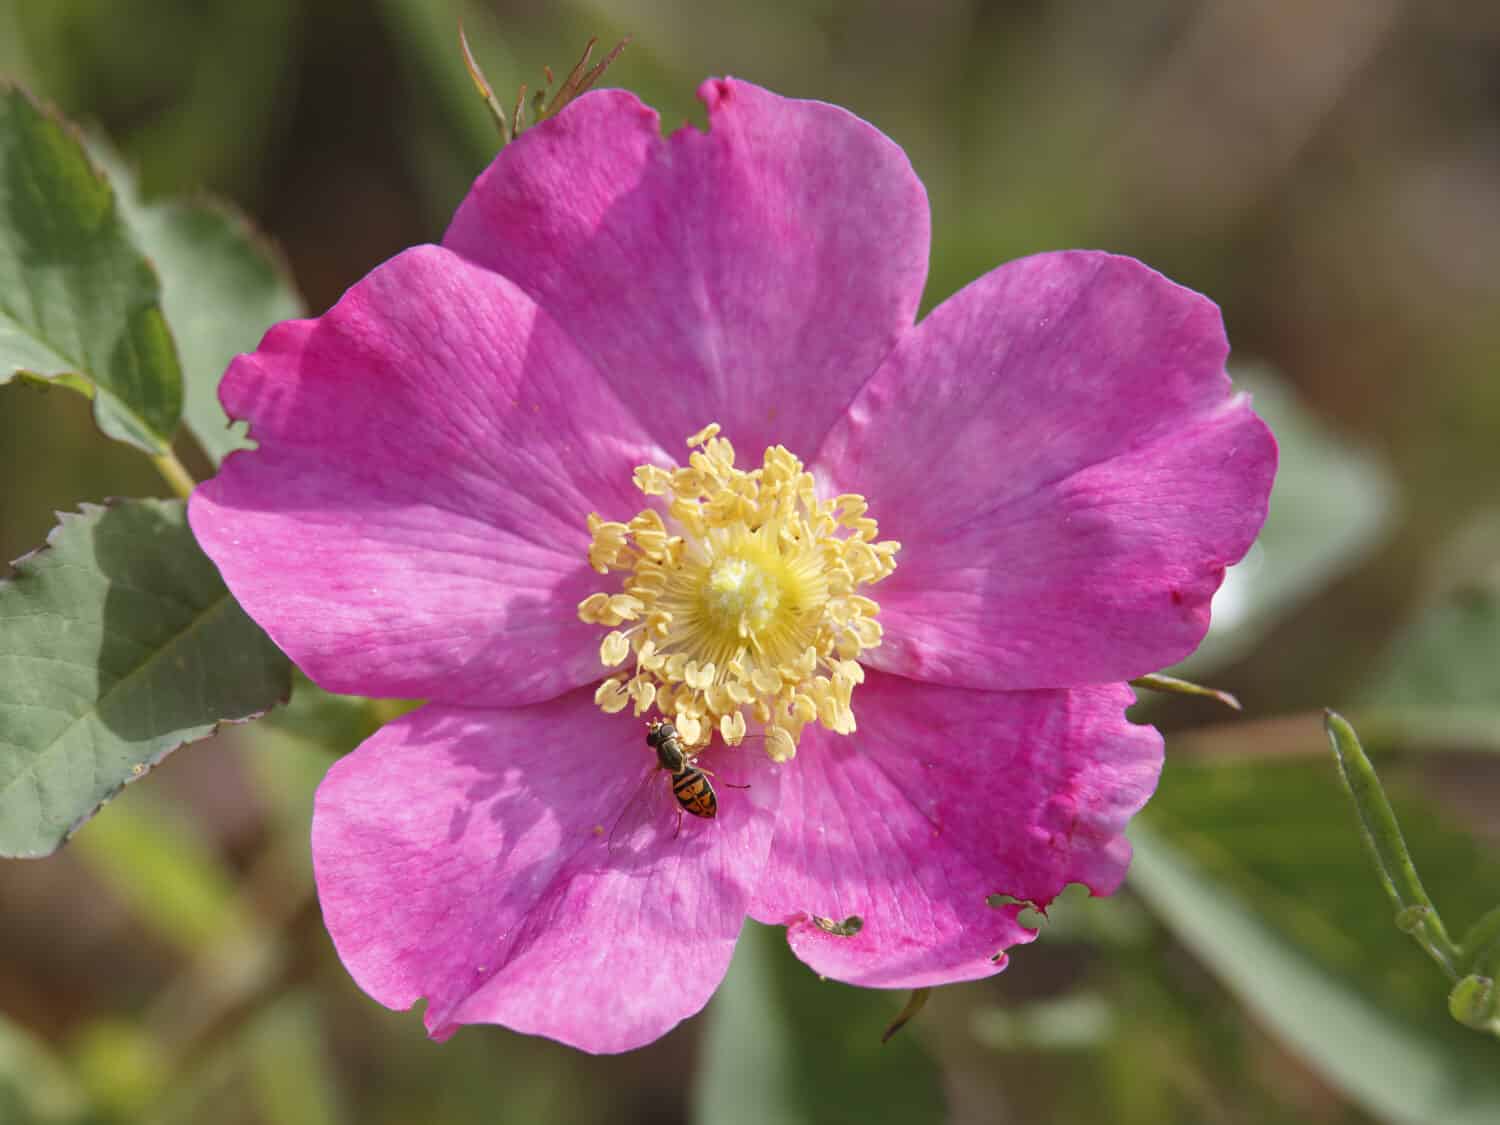 Rosa liscia (Rosa blanda) con Hoverfly - Pinery Provincial Park, Ontario, Canada